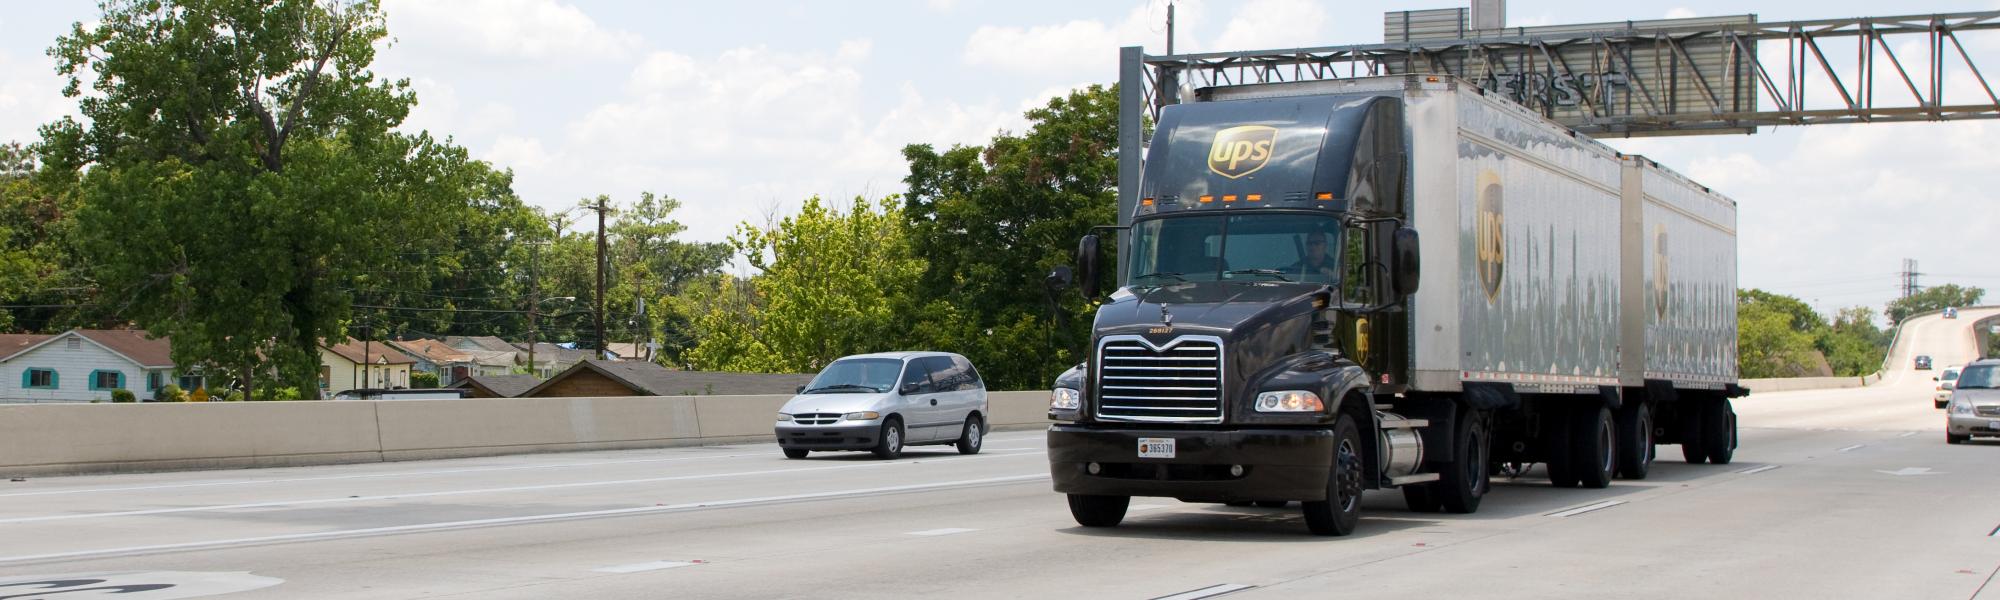 UPS通过节能卡车布局绿色公路货运未来